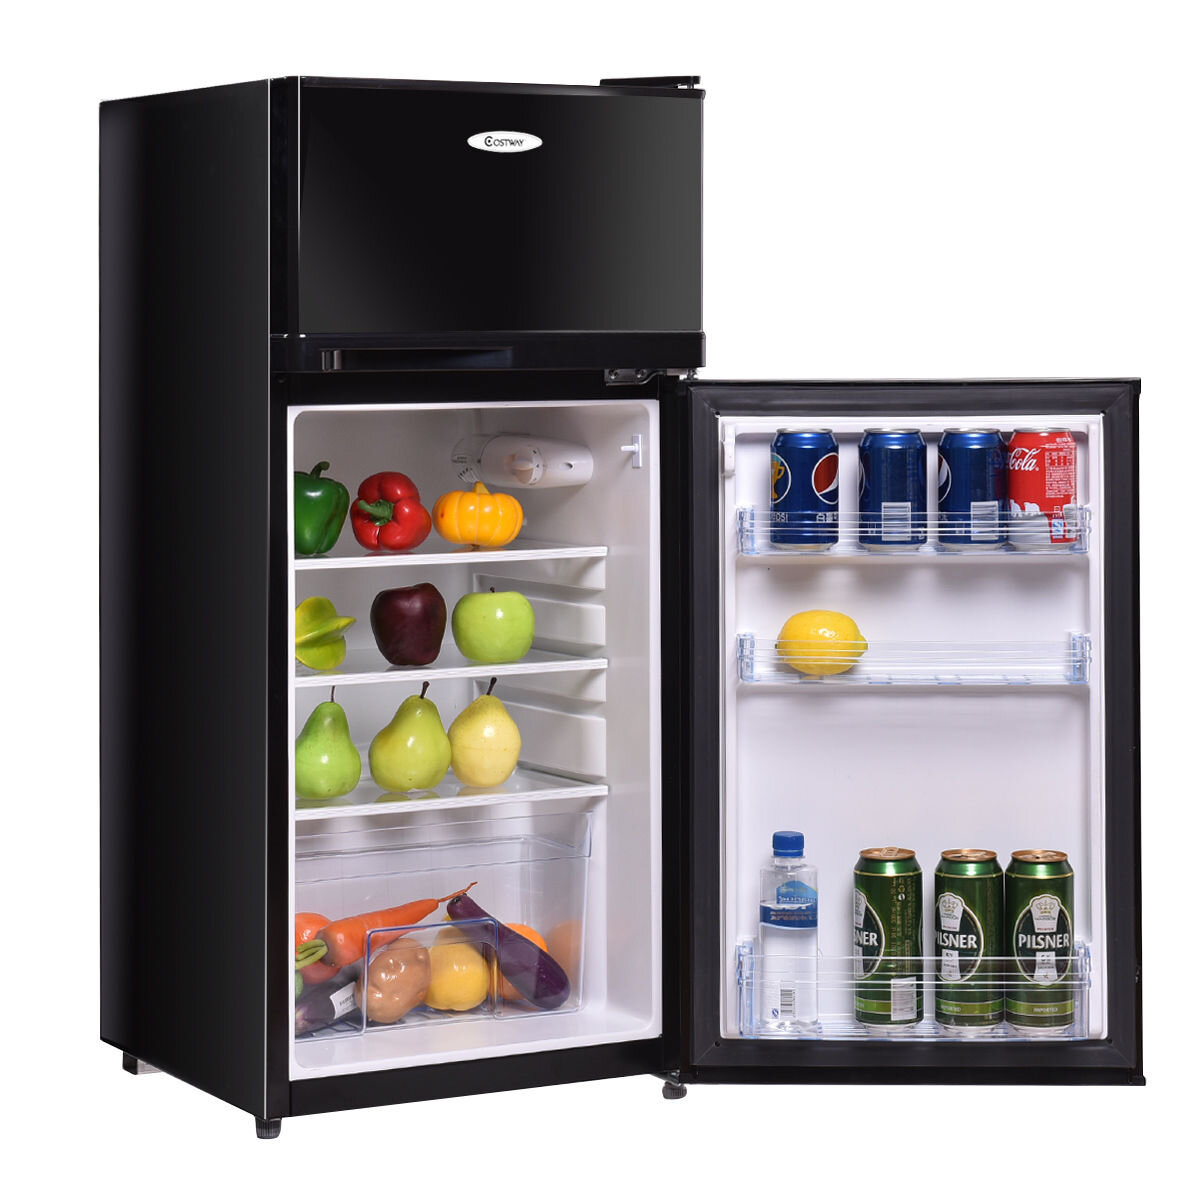 Small mini fridge with lock, 1.0 cubic feet, black